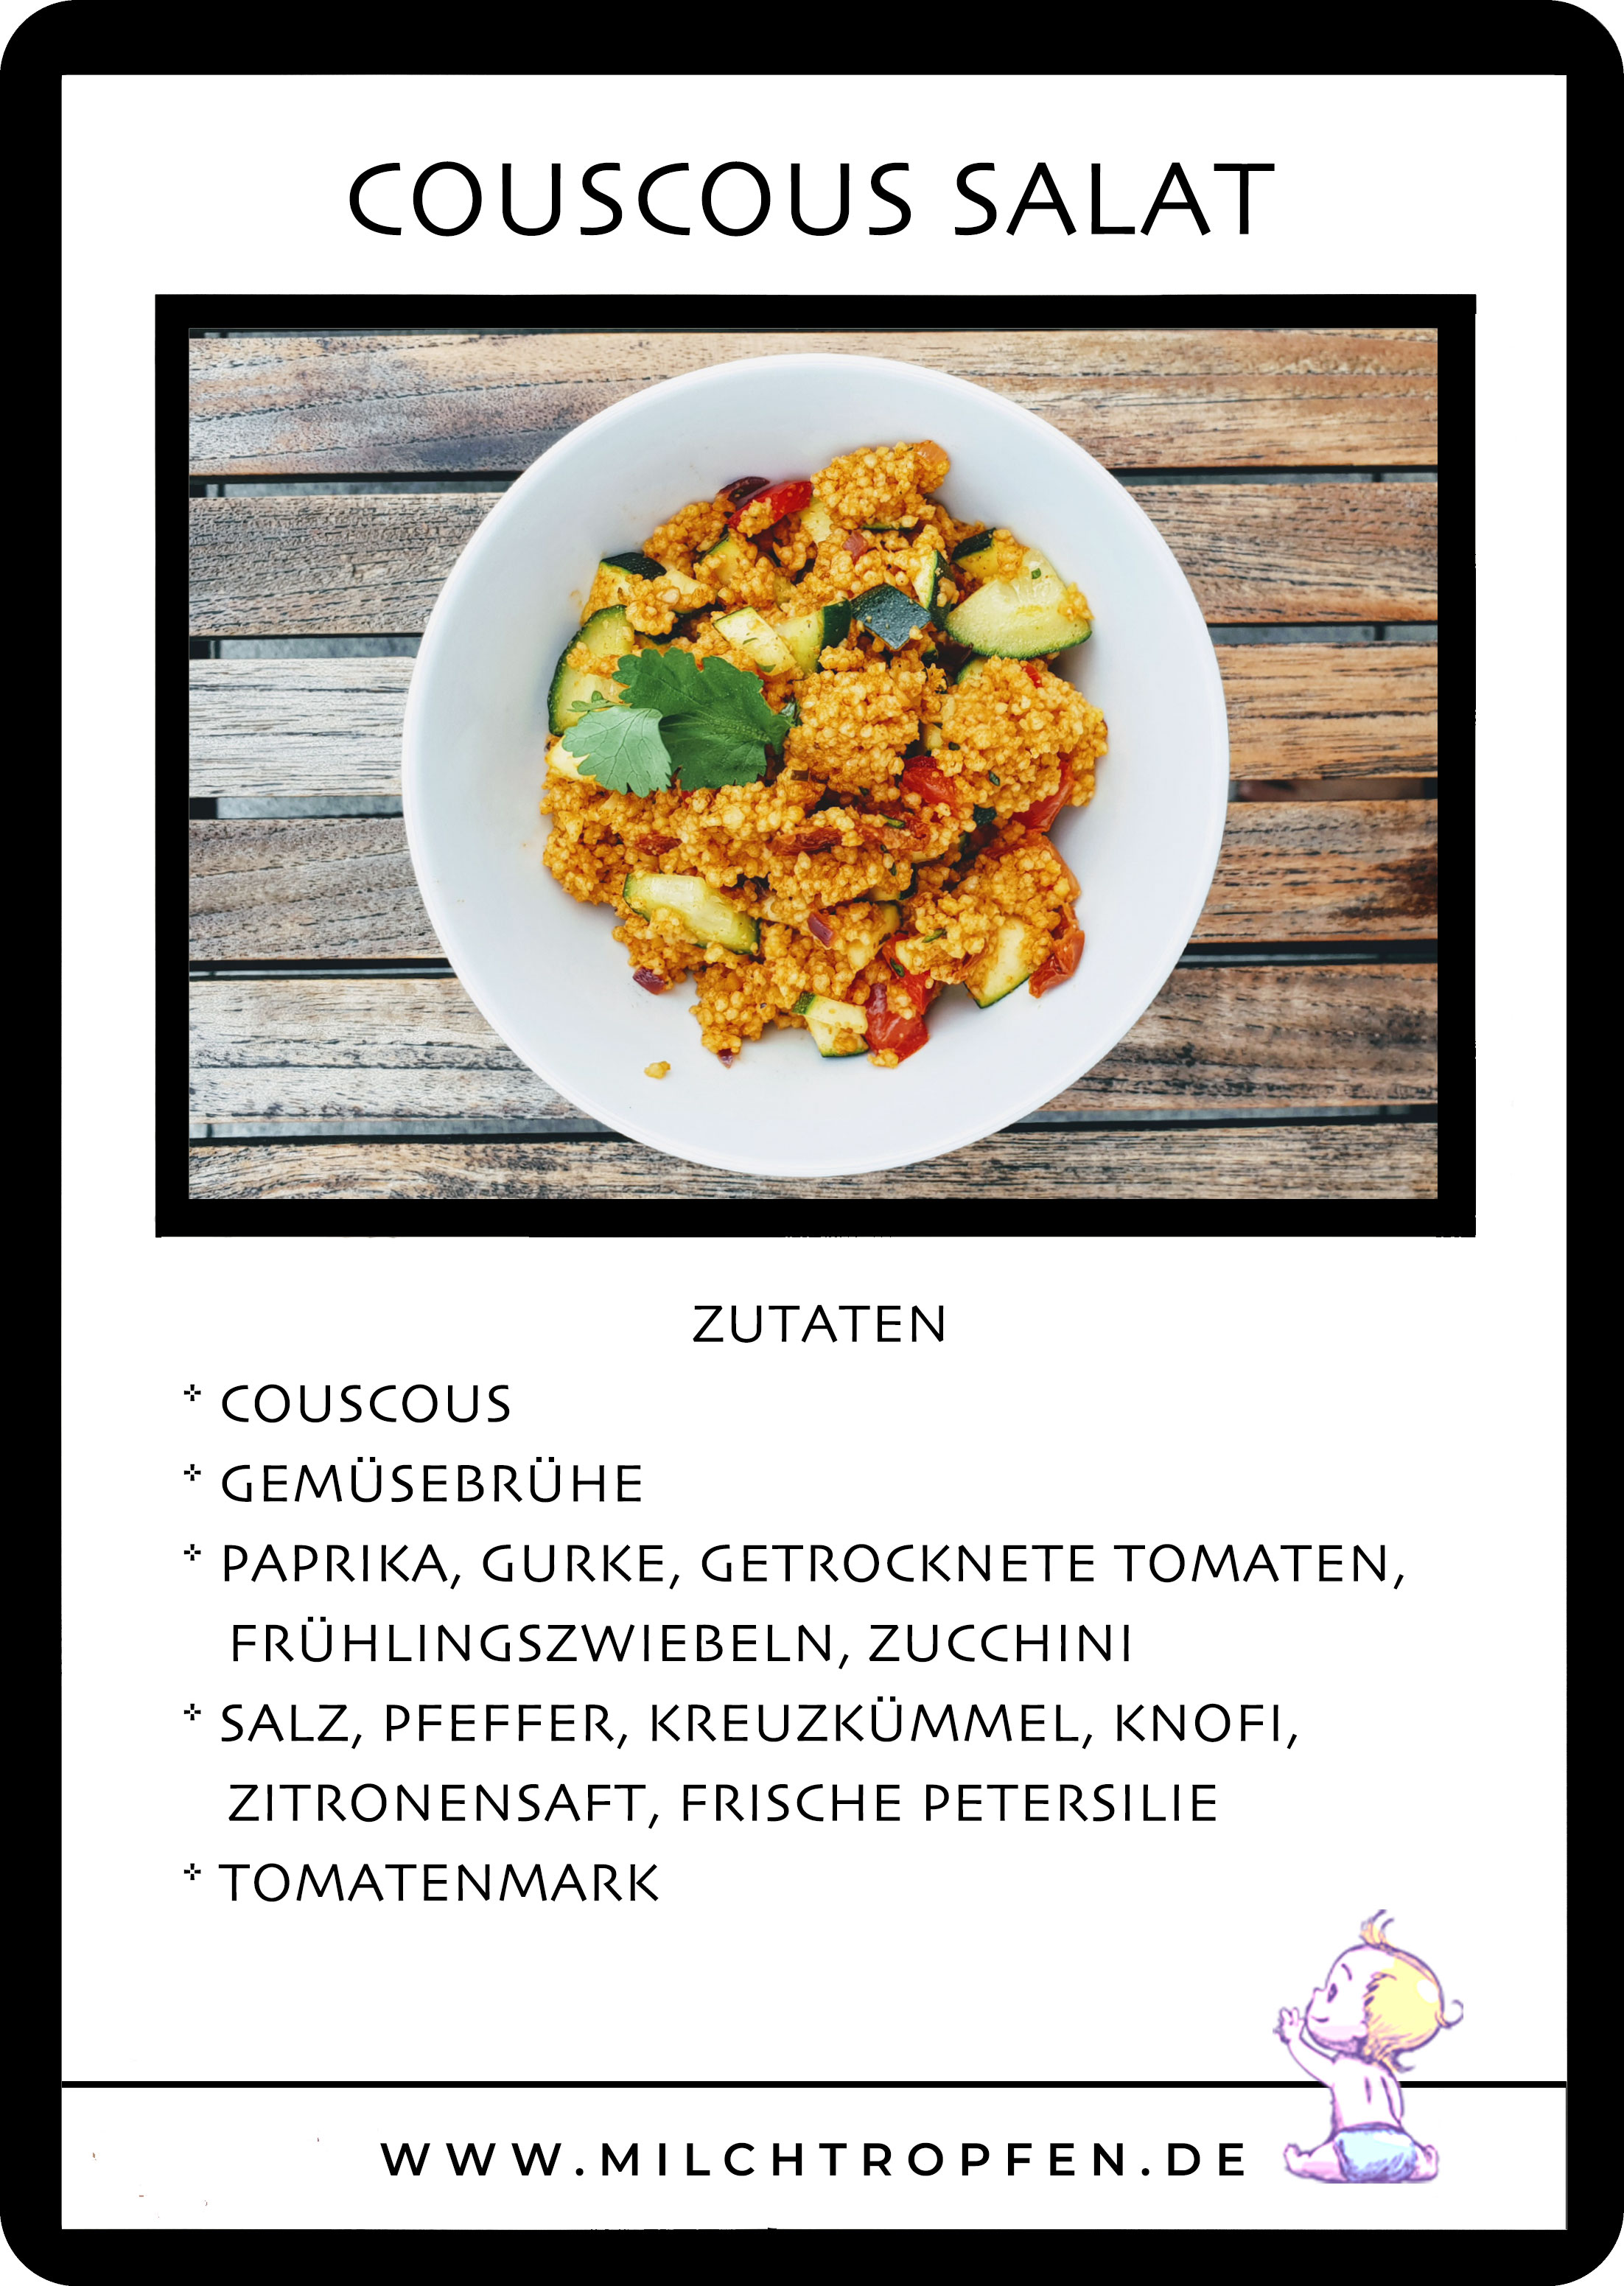 Couscous Salat | Mehr Infos auf www.milchtropfen.de